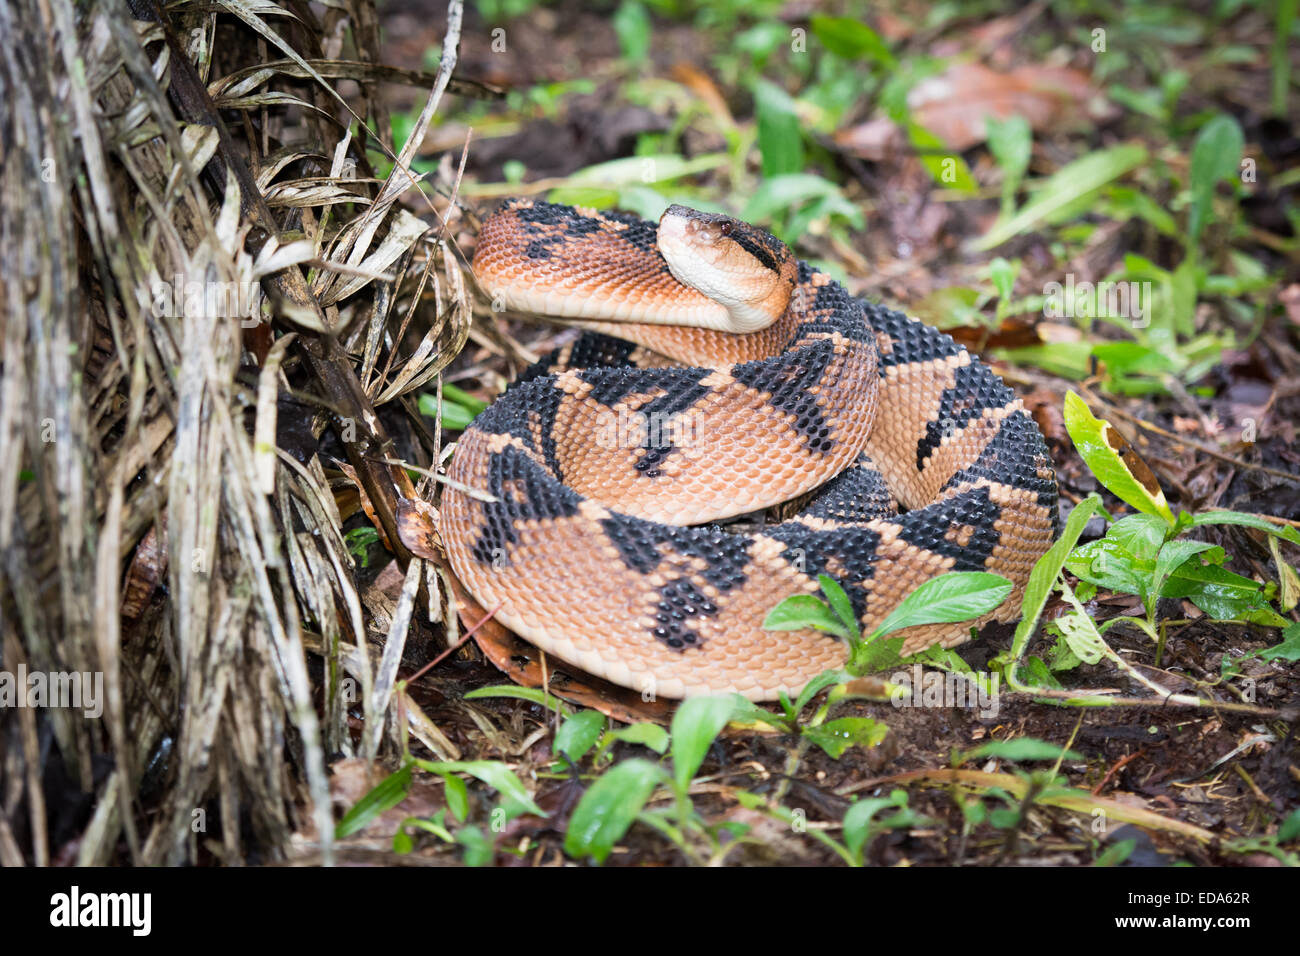 Shushupe - Amazon Bushmaster snake (lachesis muta) Banque D'Images